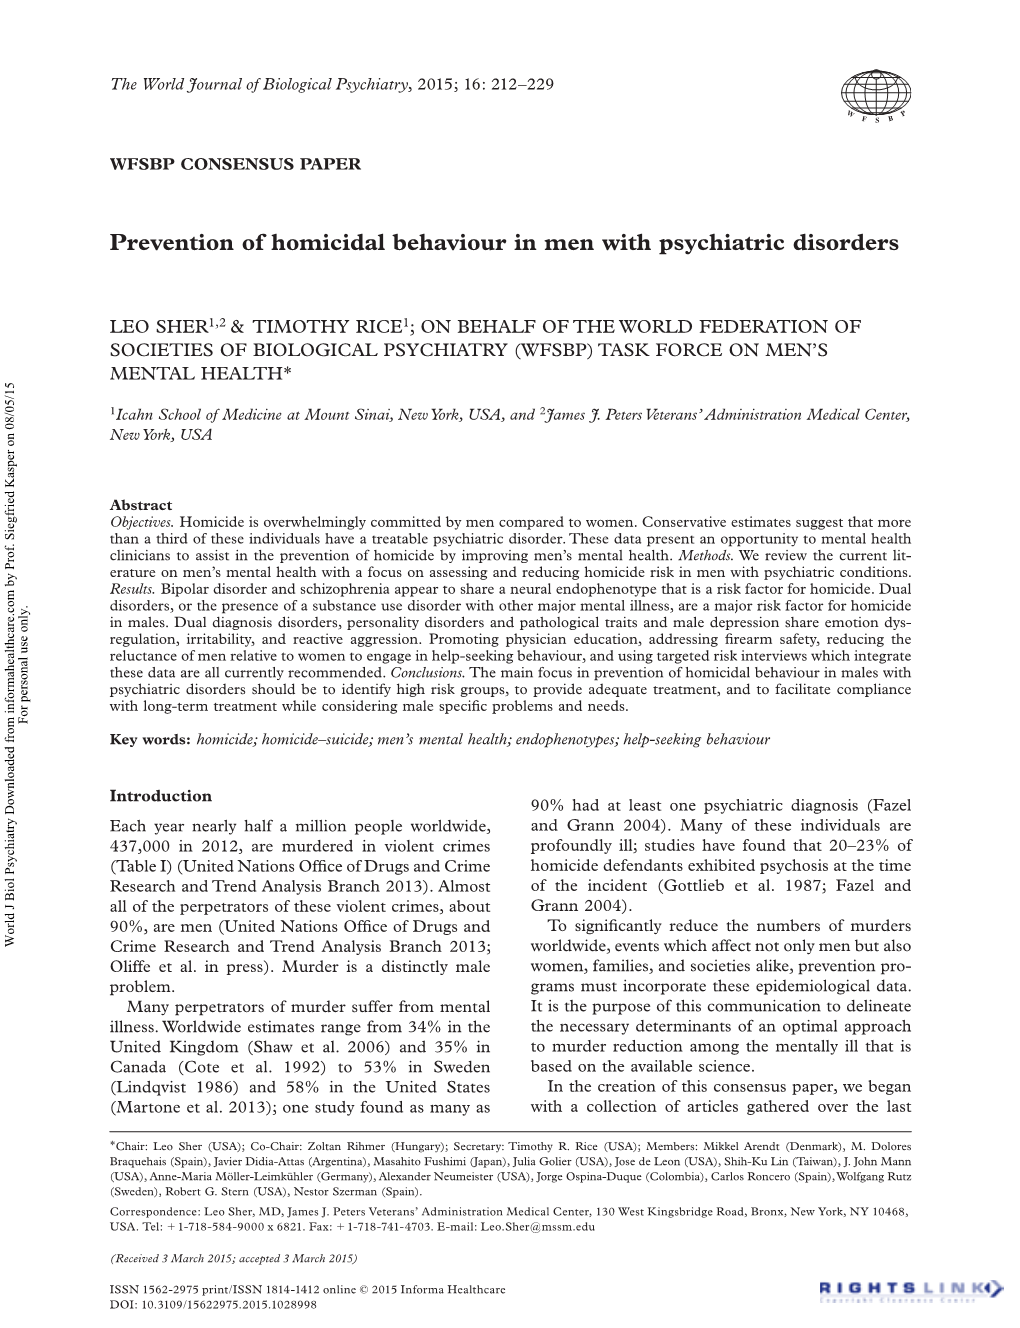 Prevention of Homicidal Behaviour in Men with Psychiatric Disorders